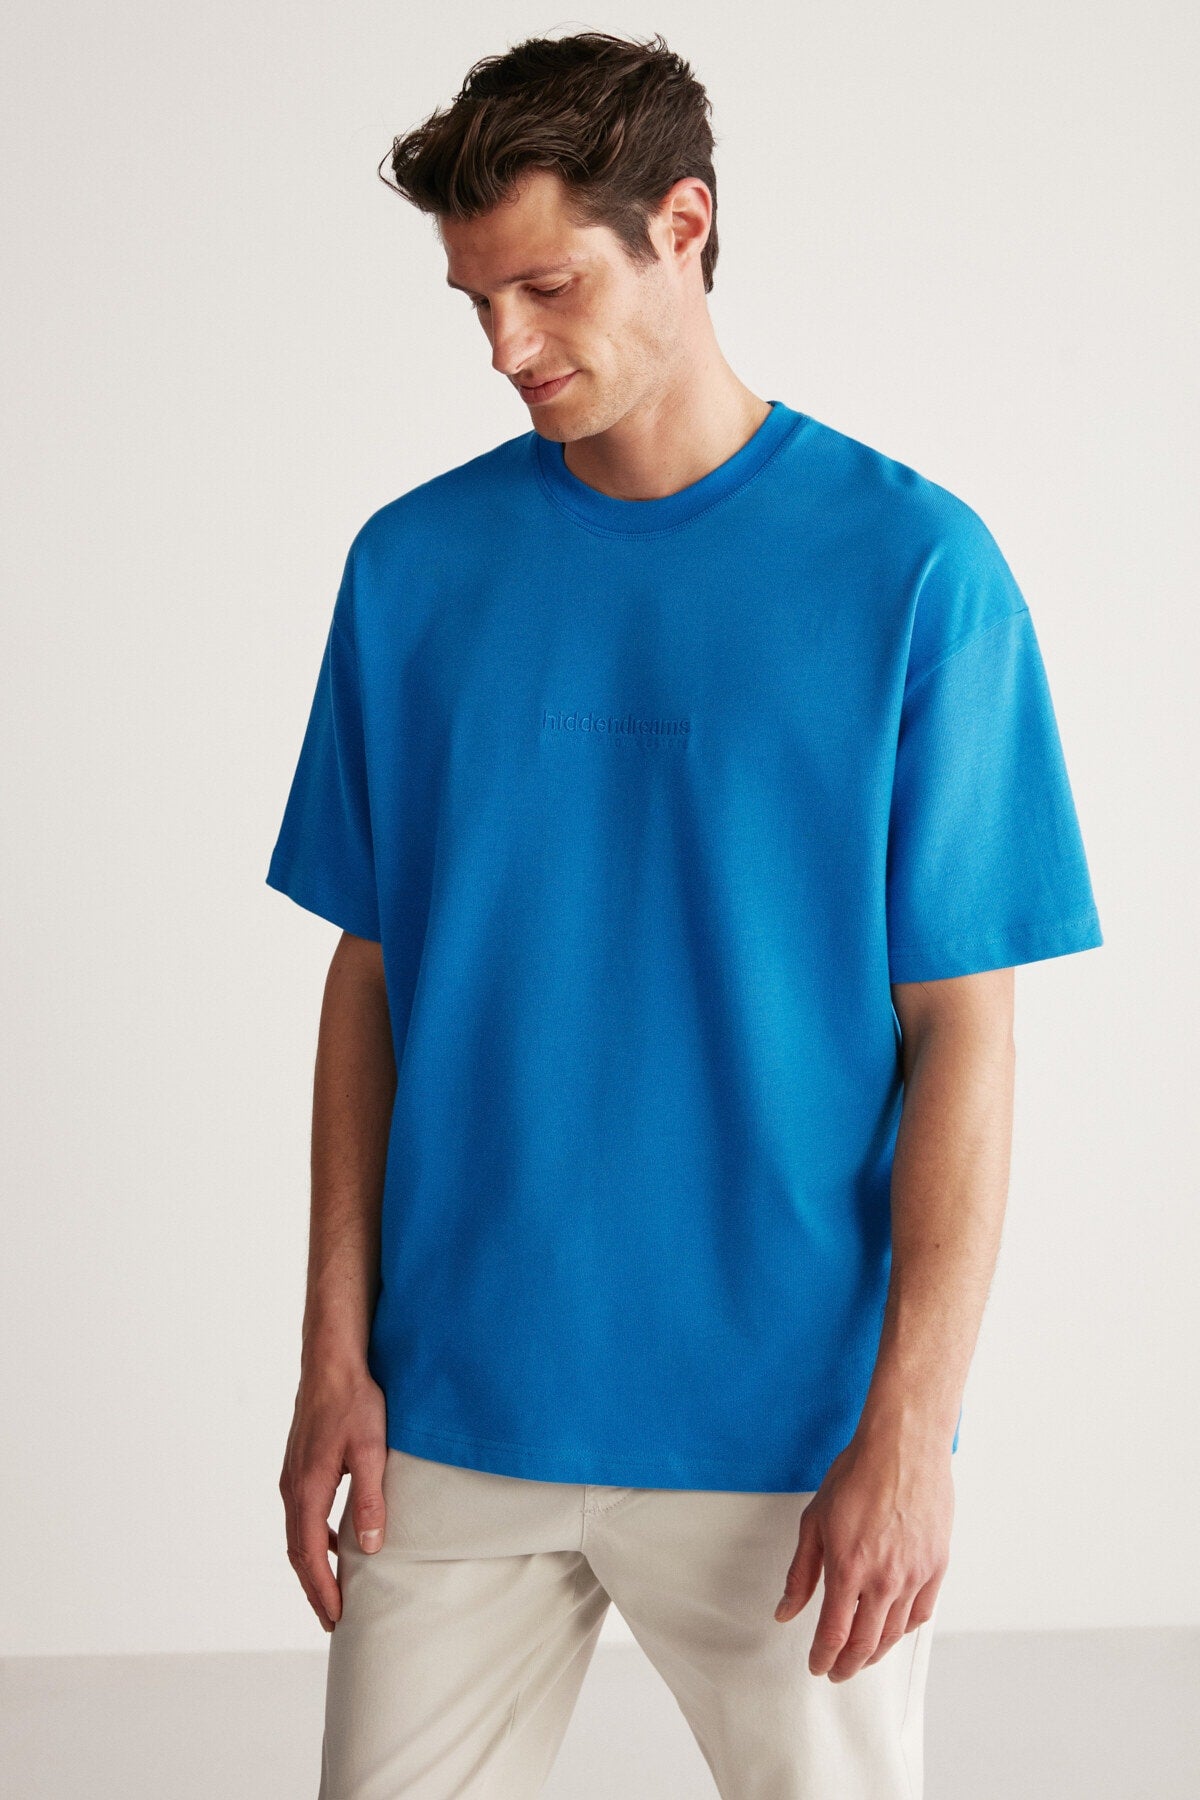 Taylor Oversize Blue T-shirt